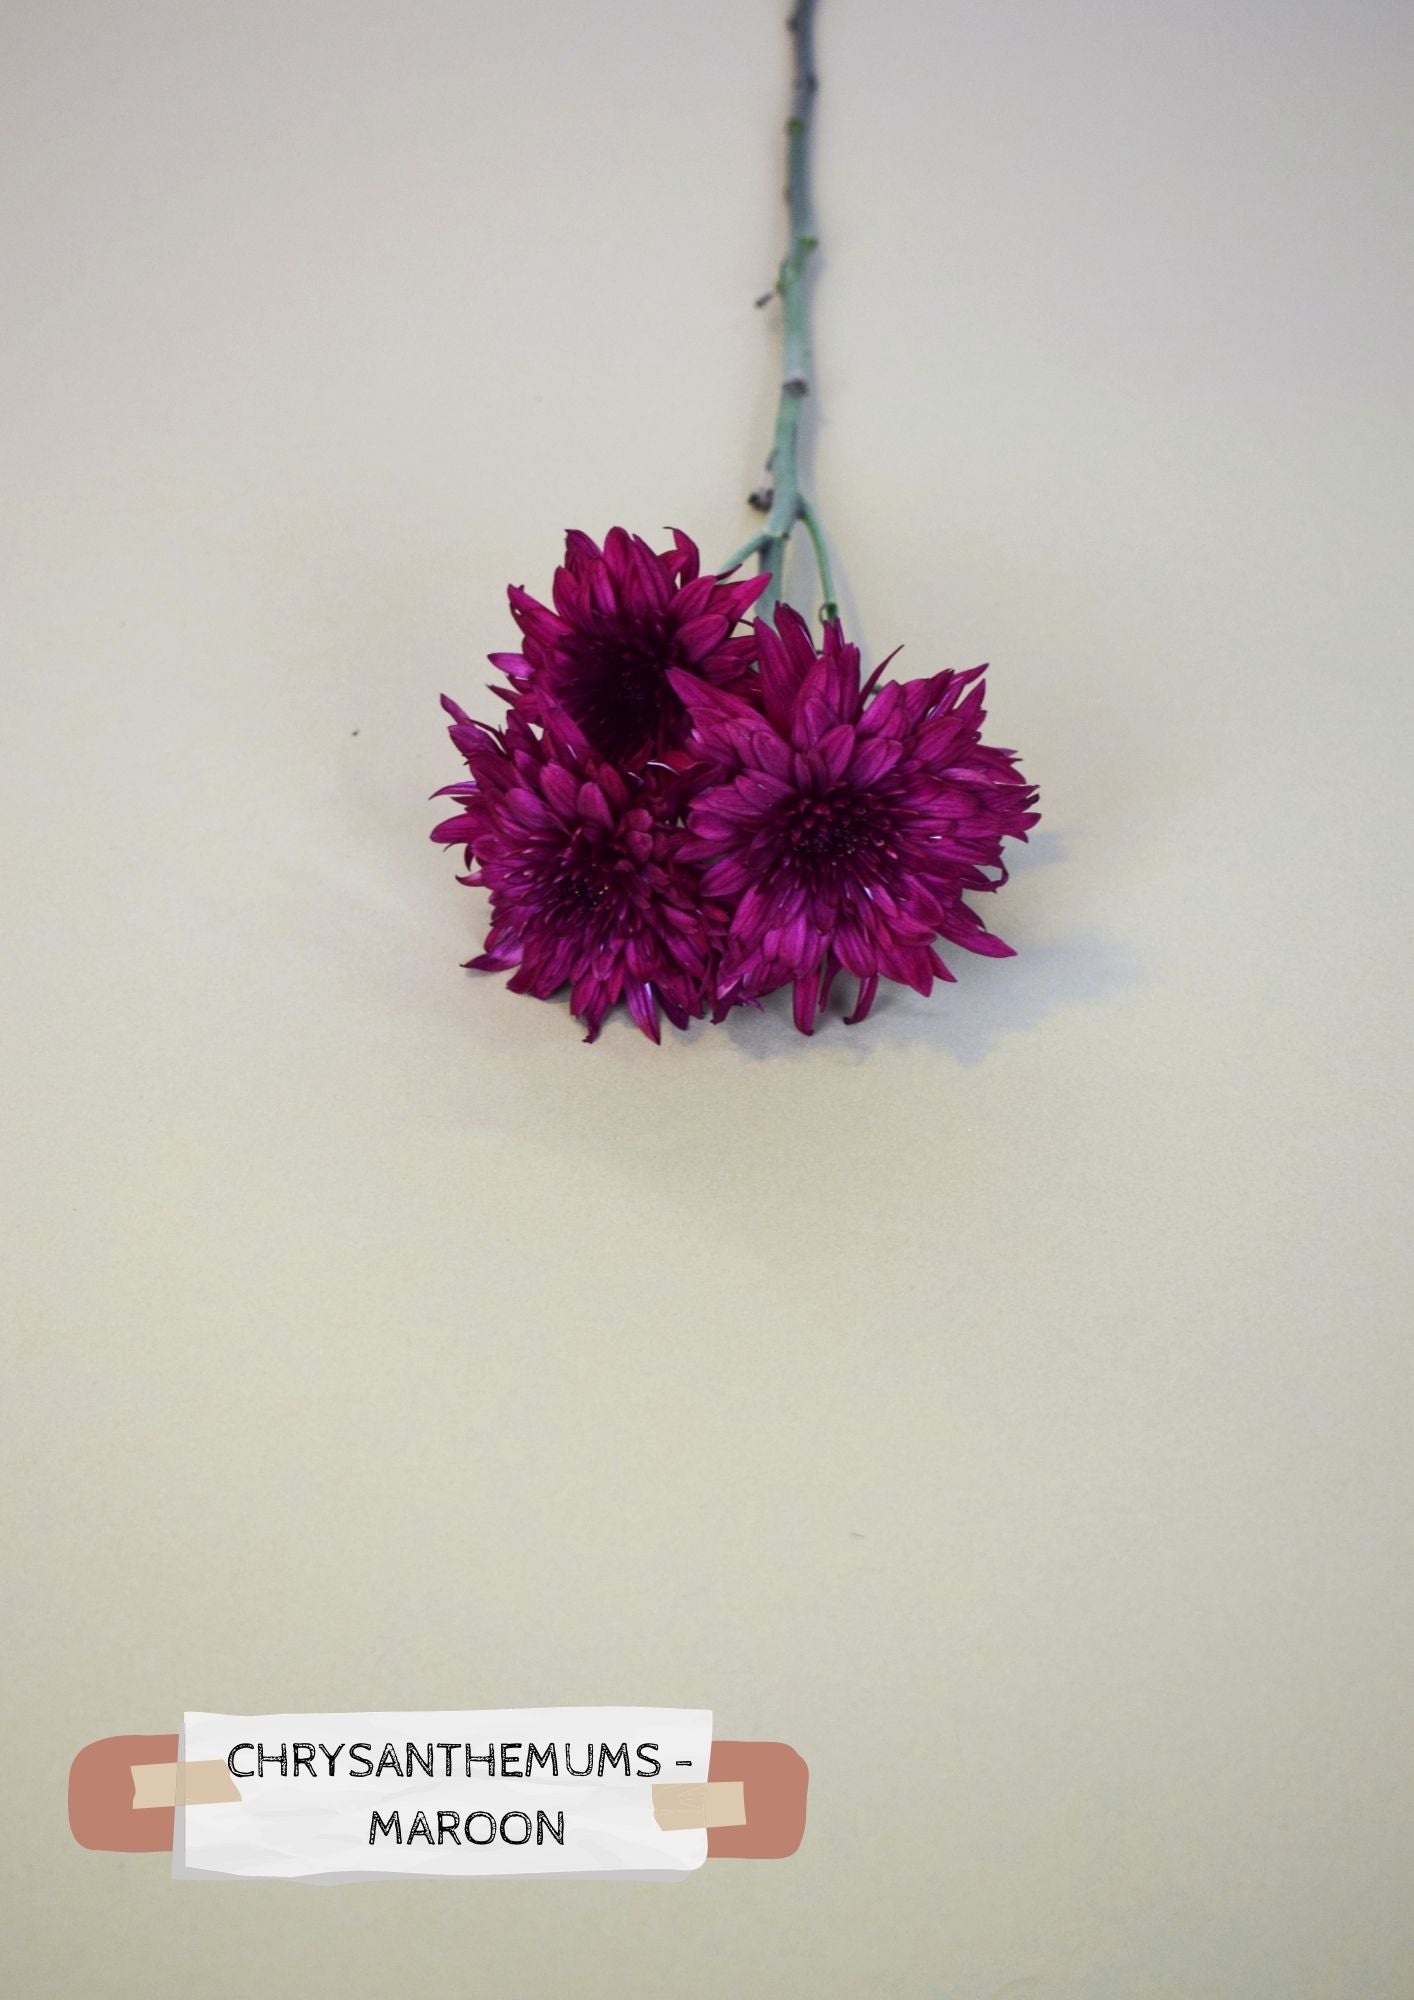 Chrysanthemum - Maroon